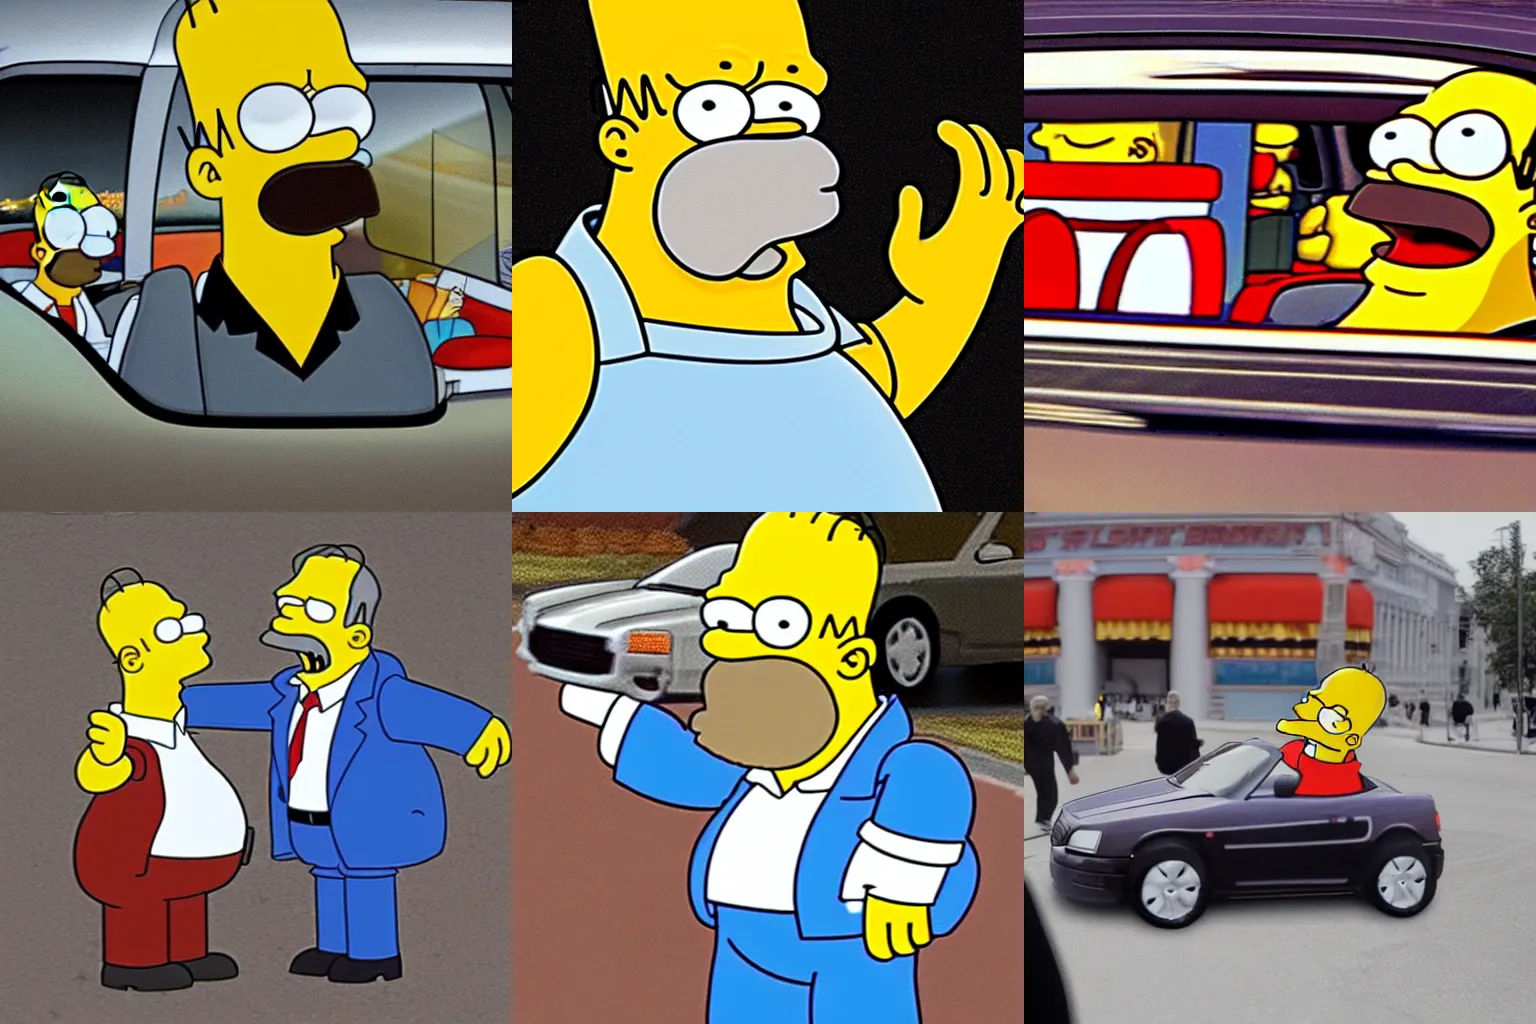 Prompt: Homer Simpson in his car runs over Donald Trump